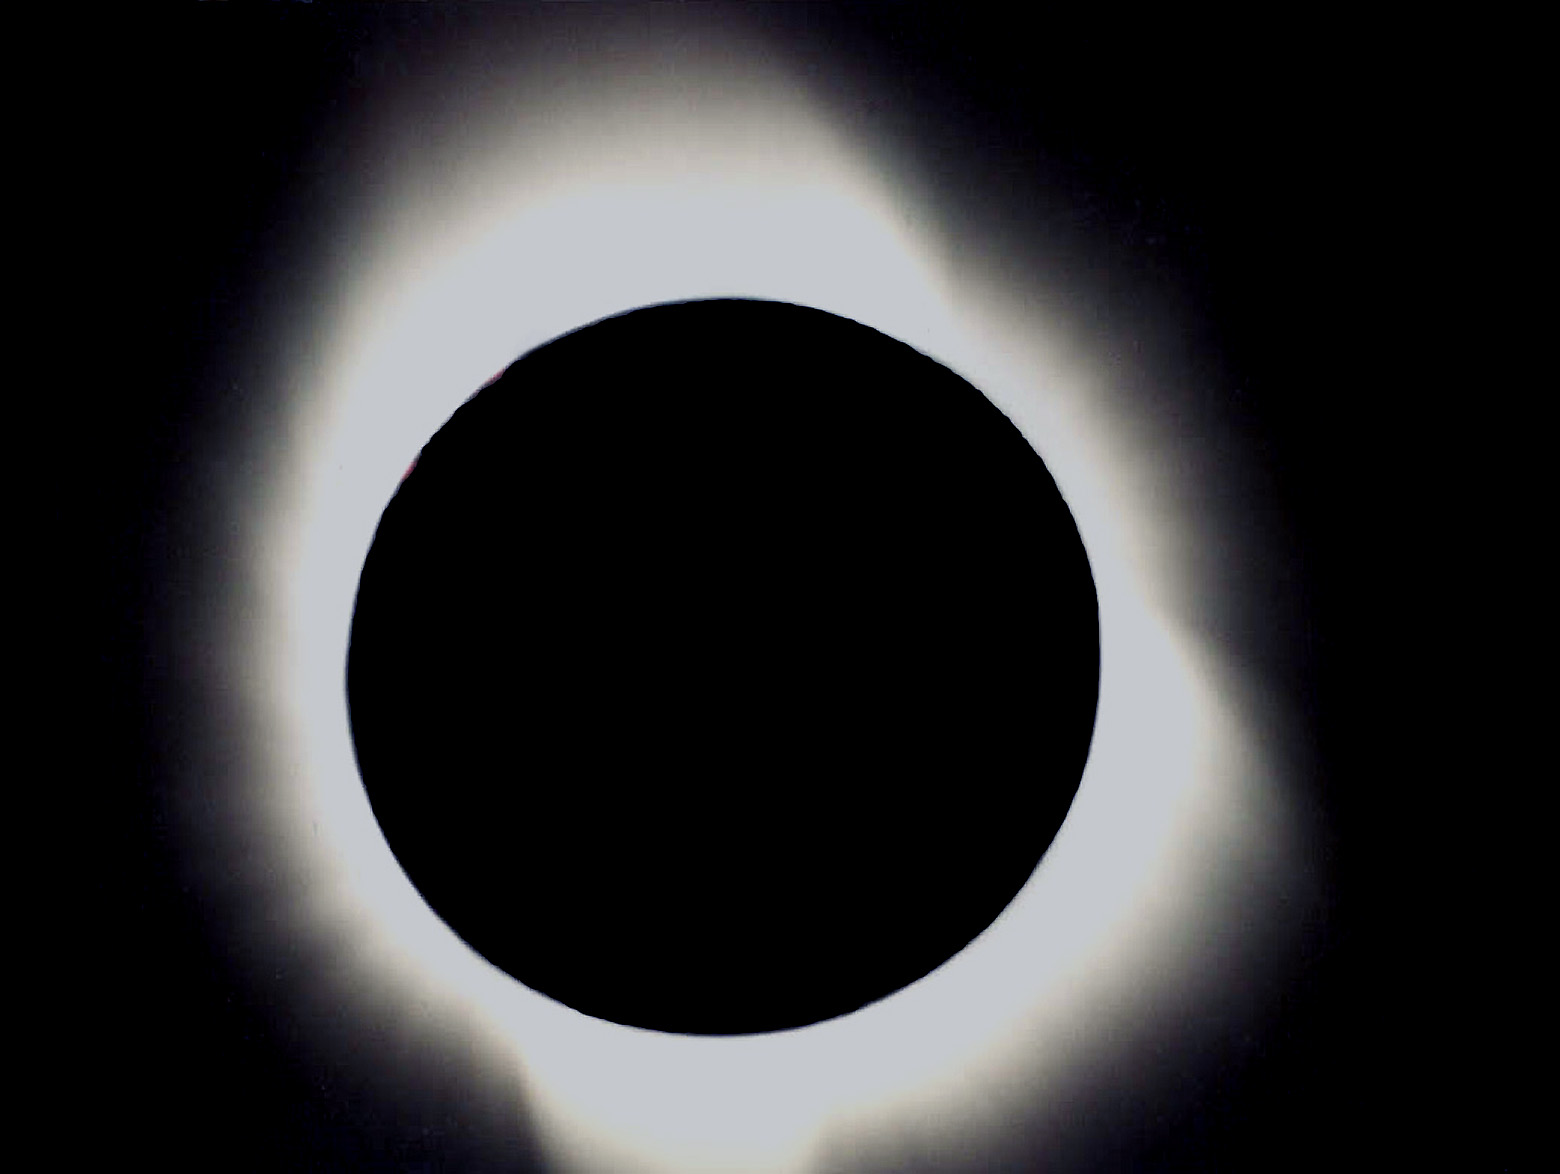 Eclipse 1994 - A68 - Full Corona - Long